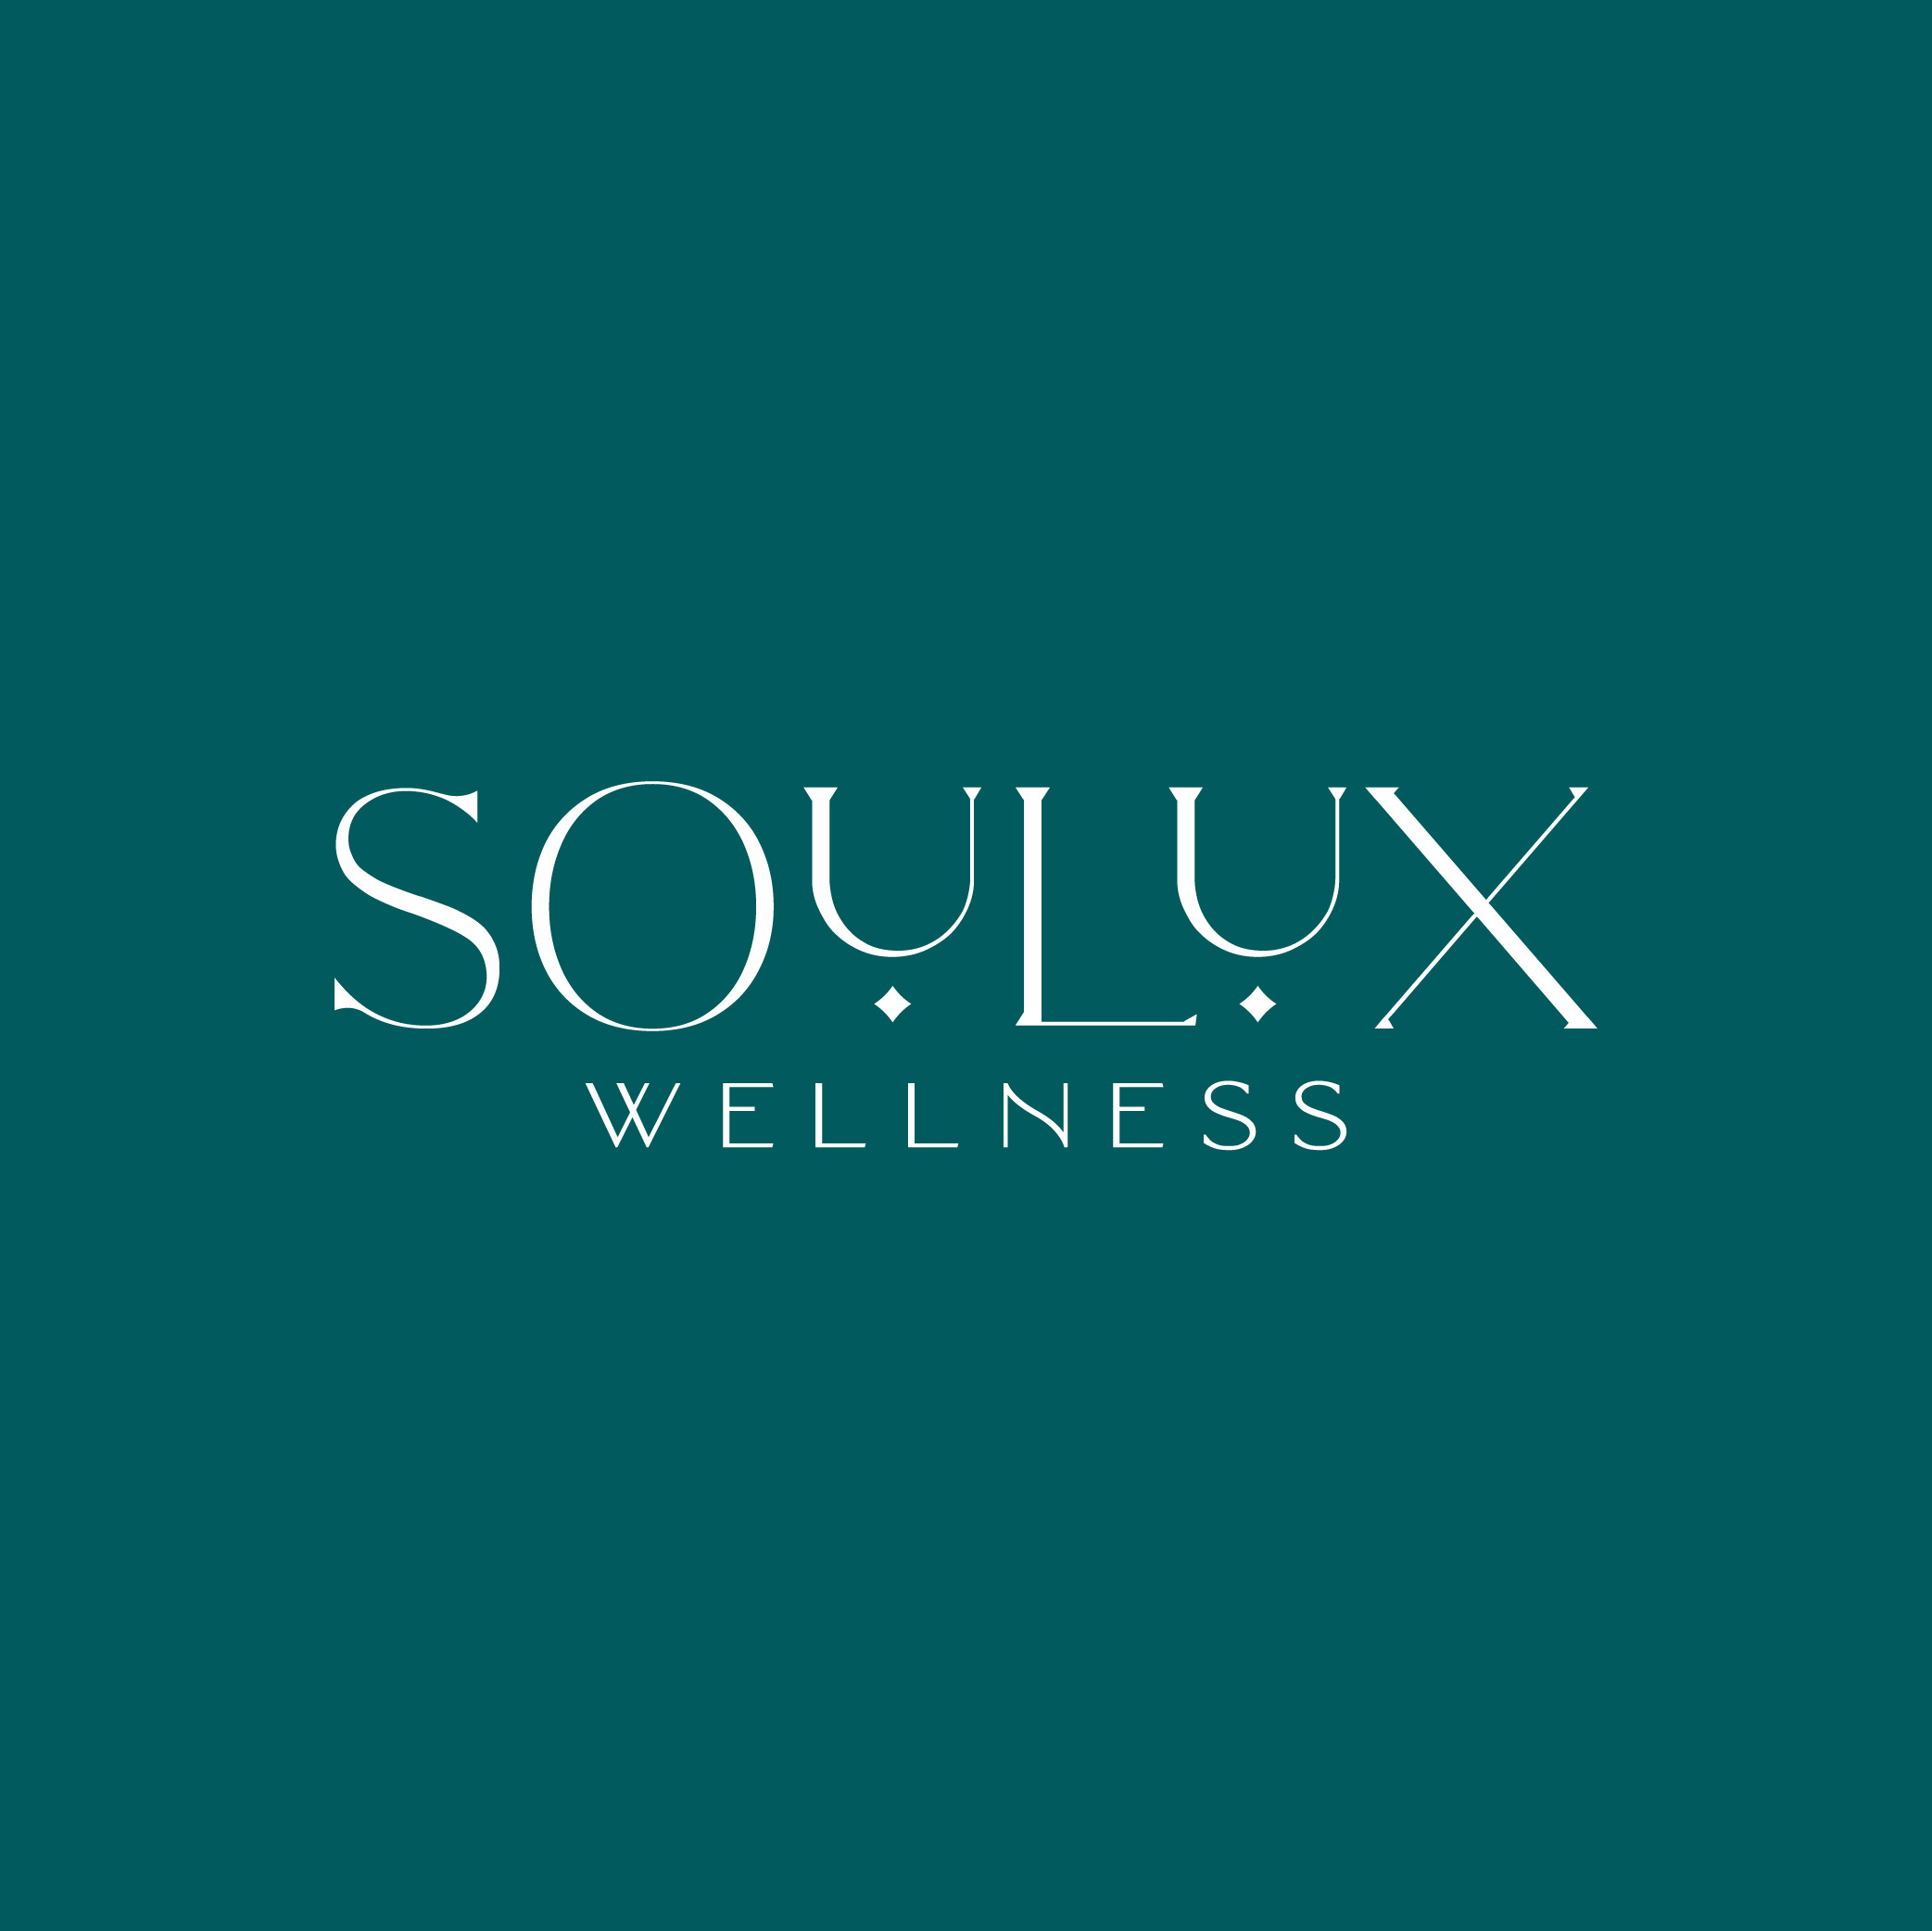 soulux wellness - Teabag Creations